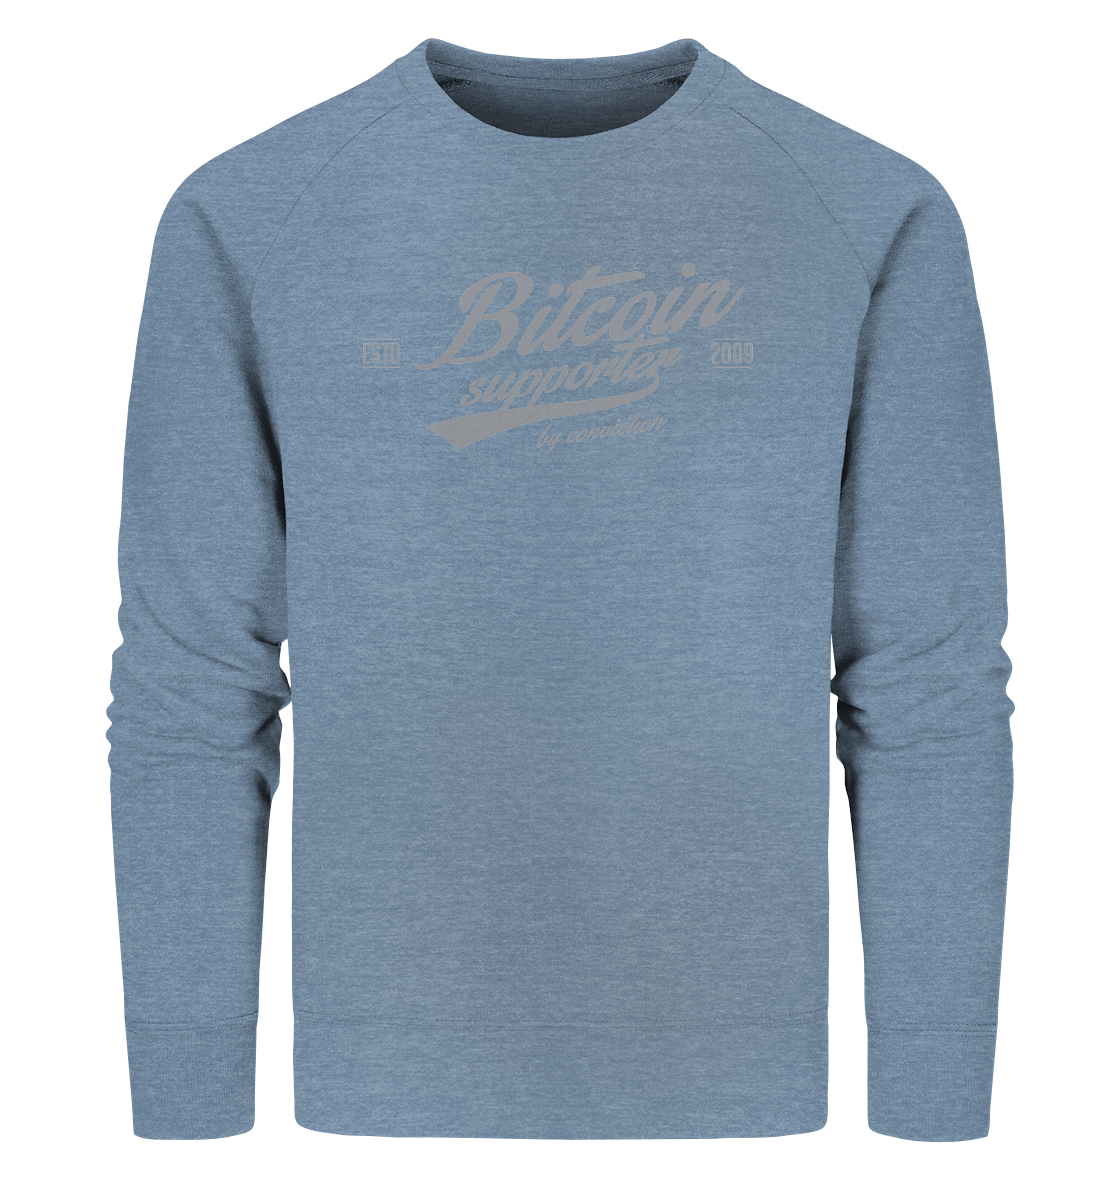 Bitcoin "supporter"  - Organic Sweatshirt